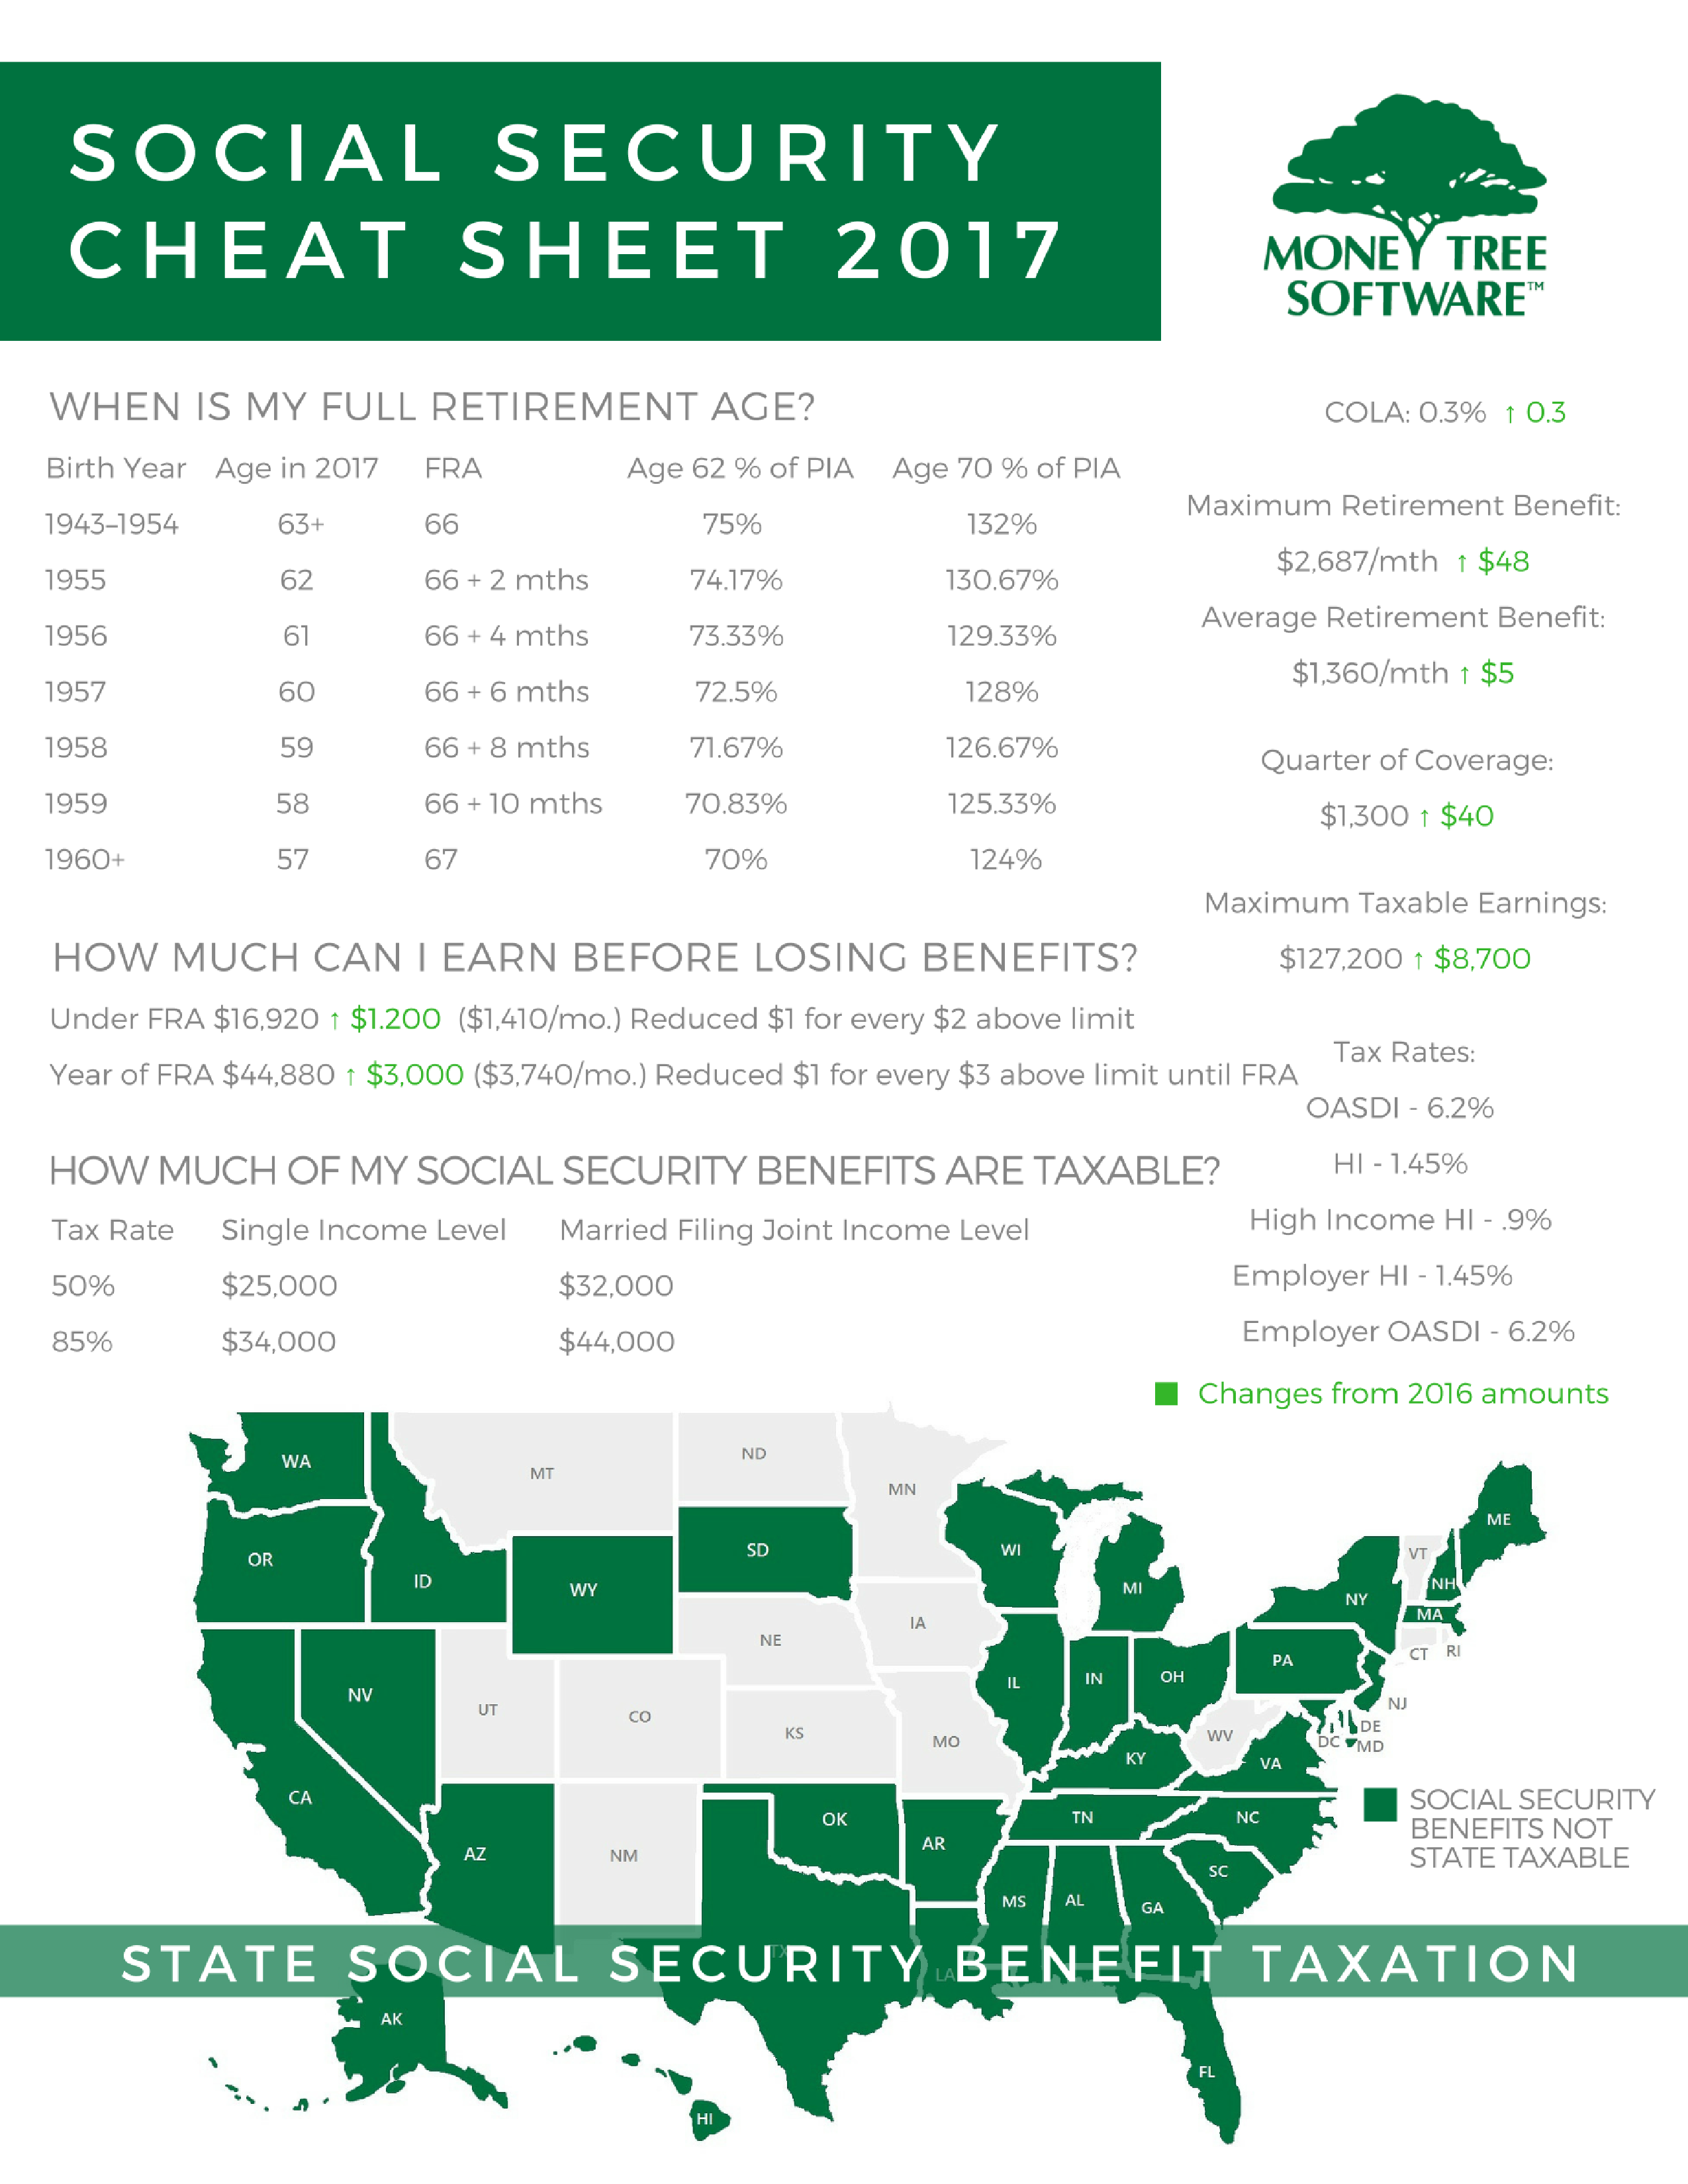 SS Cheat Sheet 2017